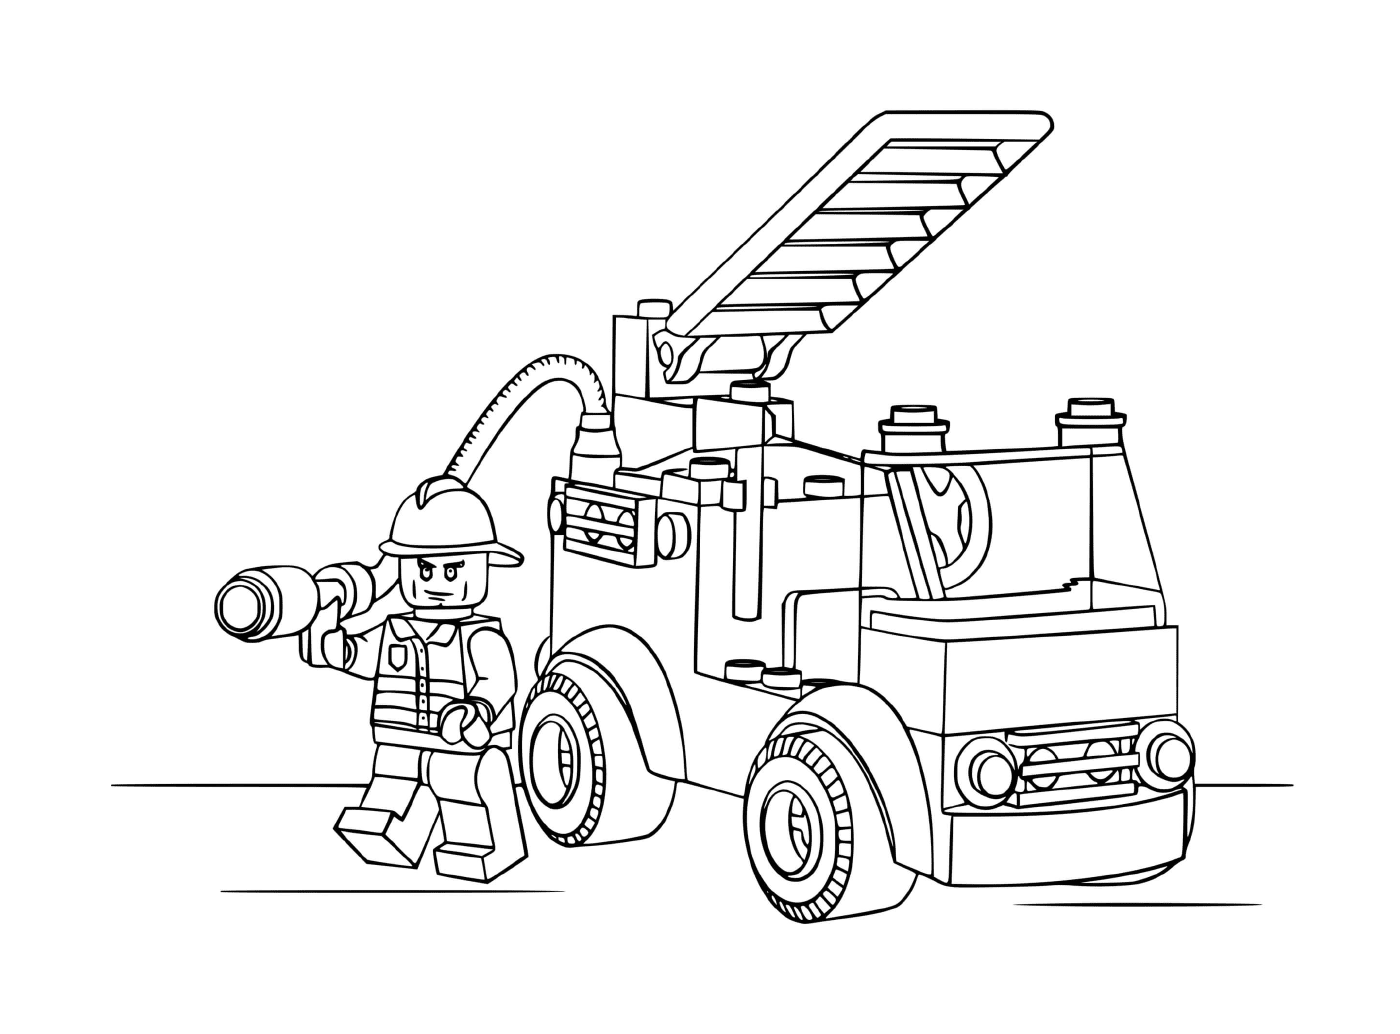  बचाव करनेवाले के साथ लेगो आग ट्रक 